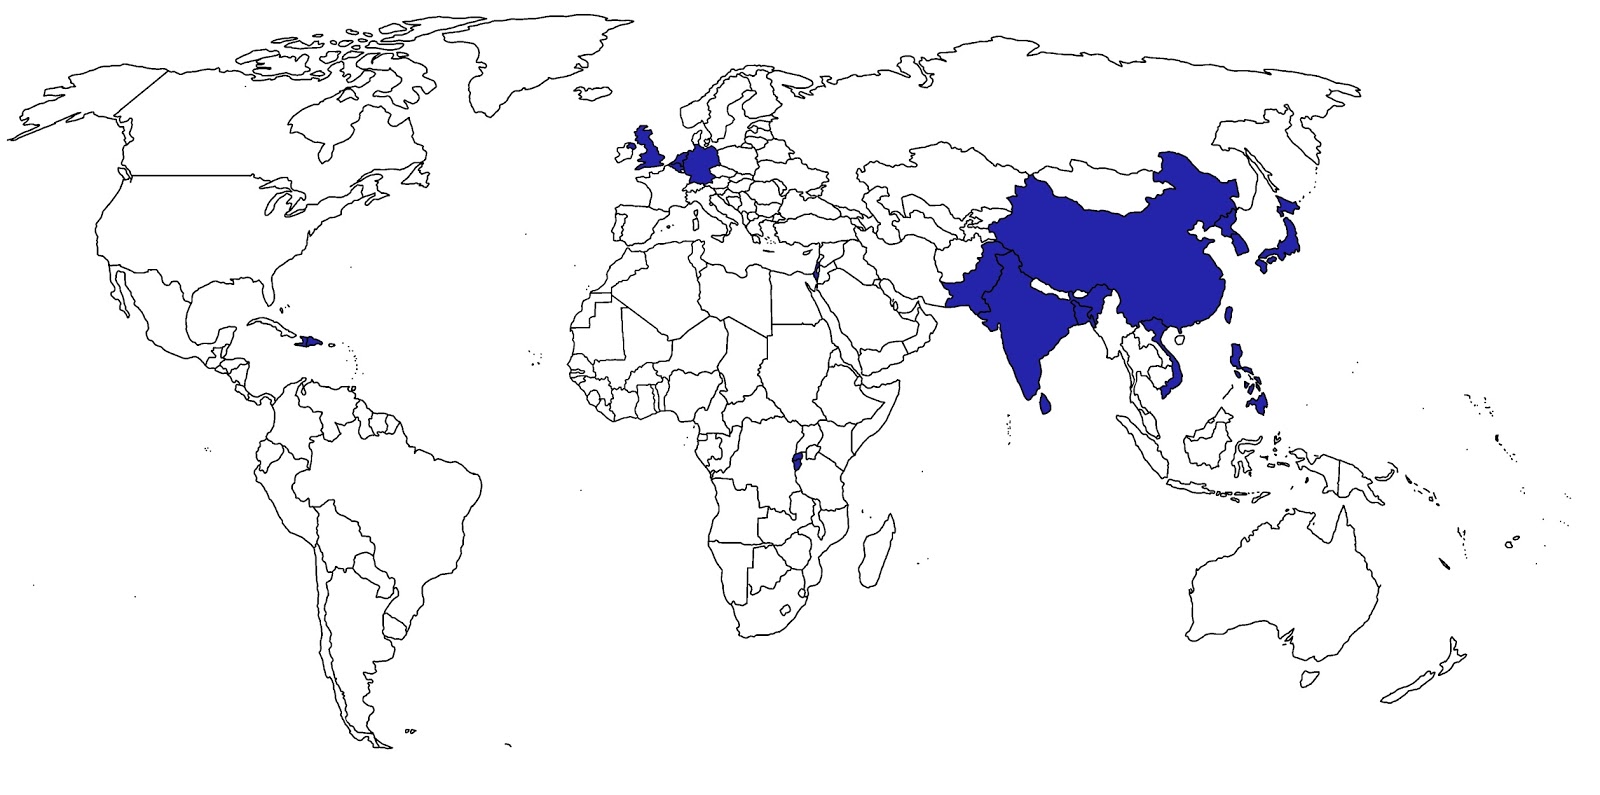 Half of the world's population 